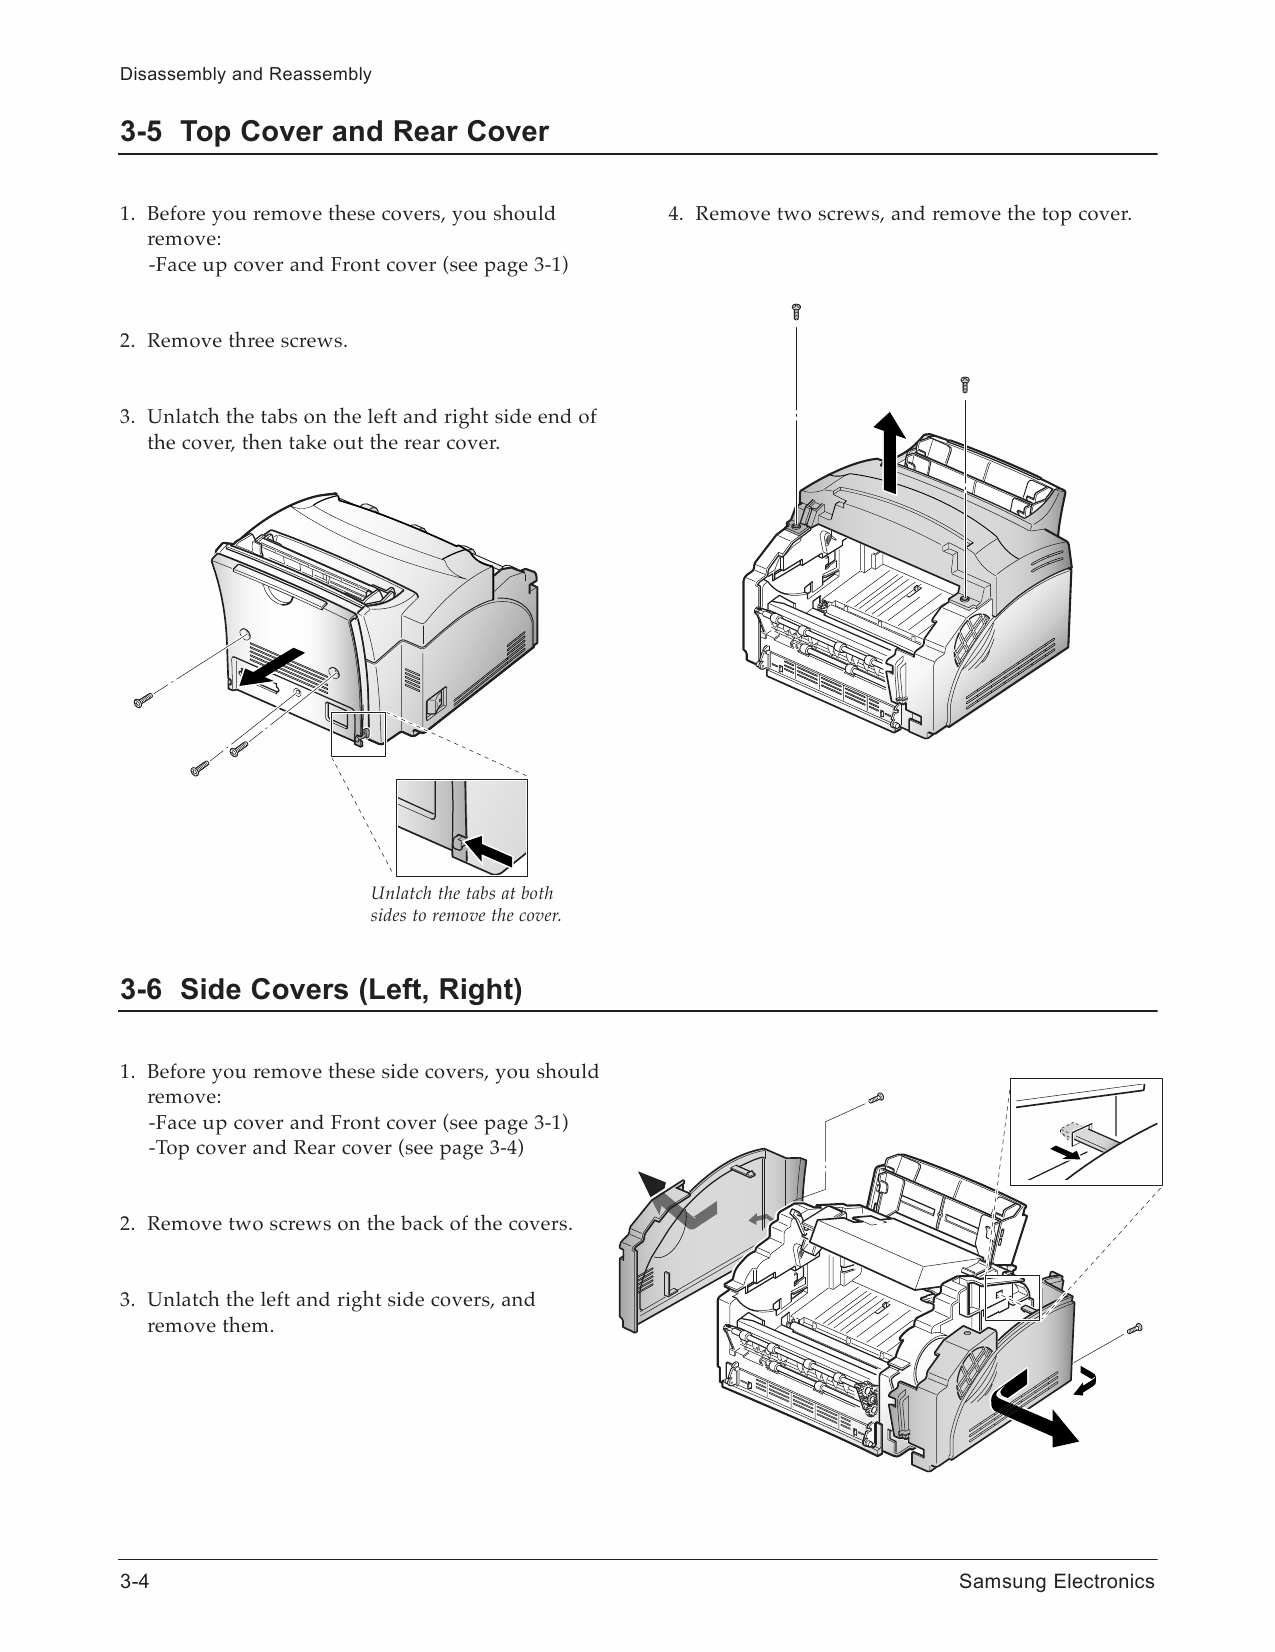 Samsung Laser-Printer ML-5000A Parts and Service Manual-3